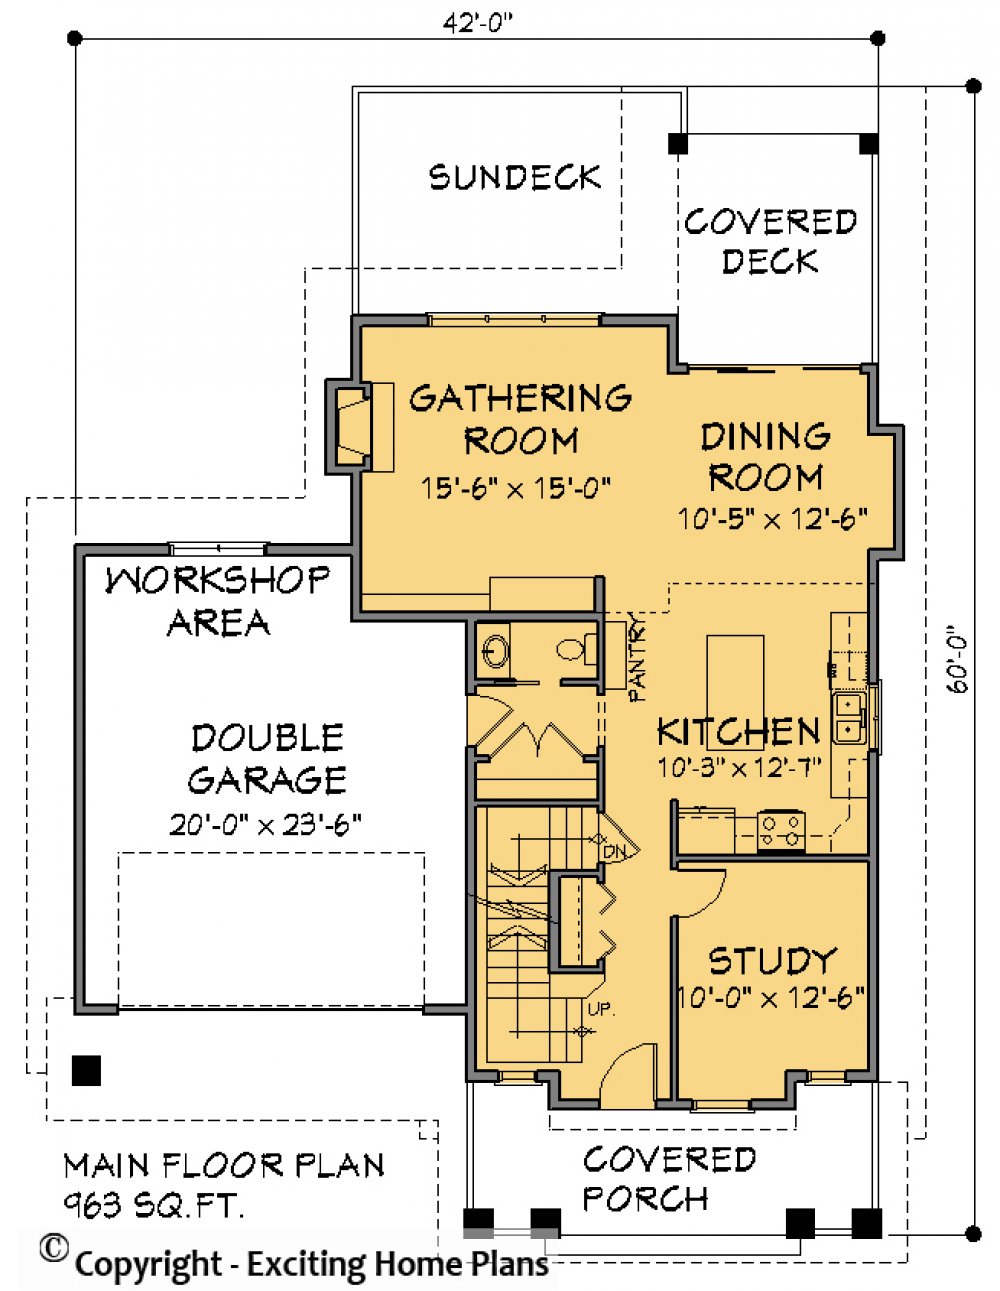 House Plan E1307-10 Main Floor Plan